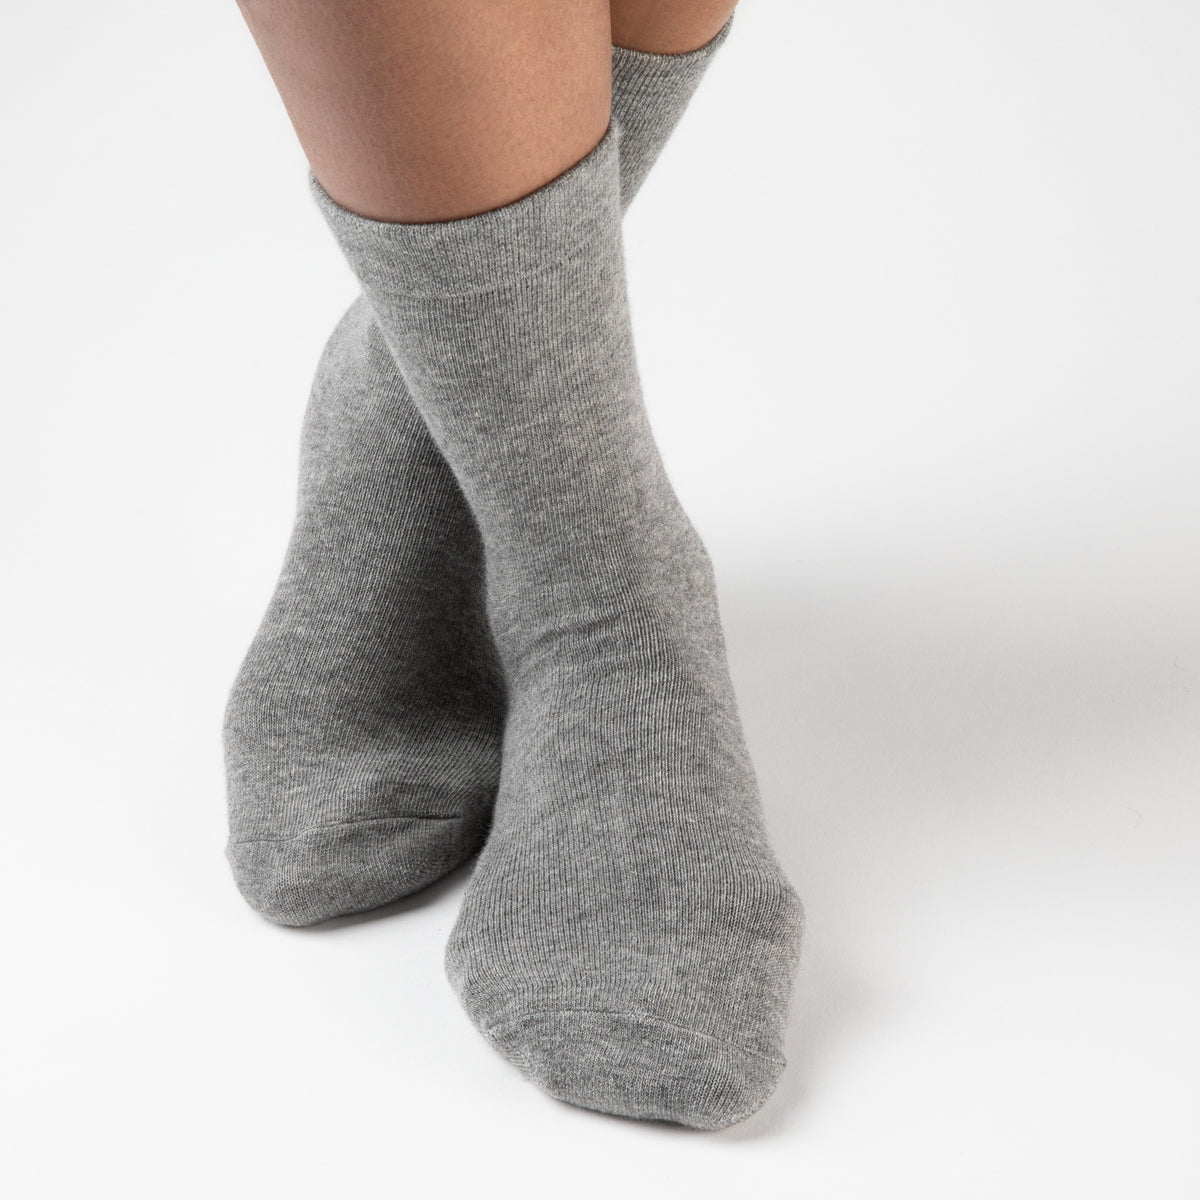 Women's Black/Grey Original Crew Non-Slip Socks - 3 pairs